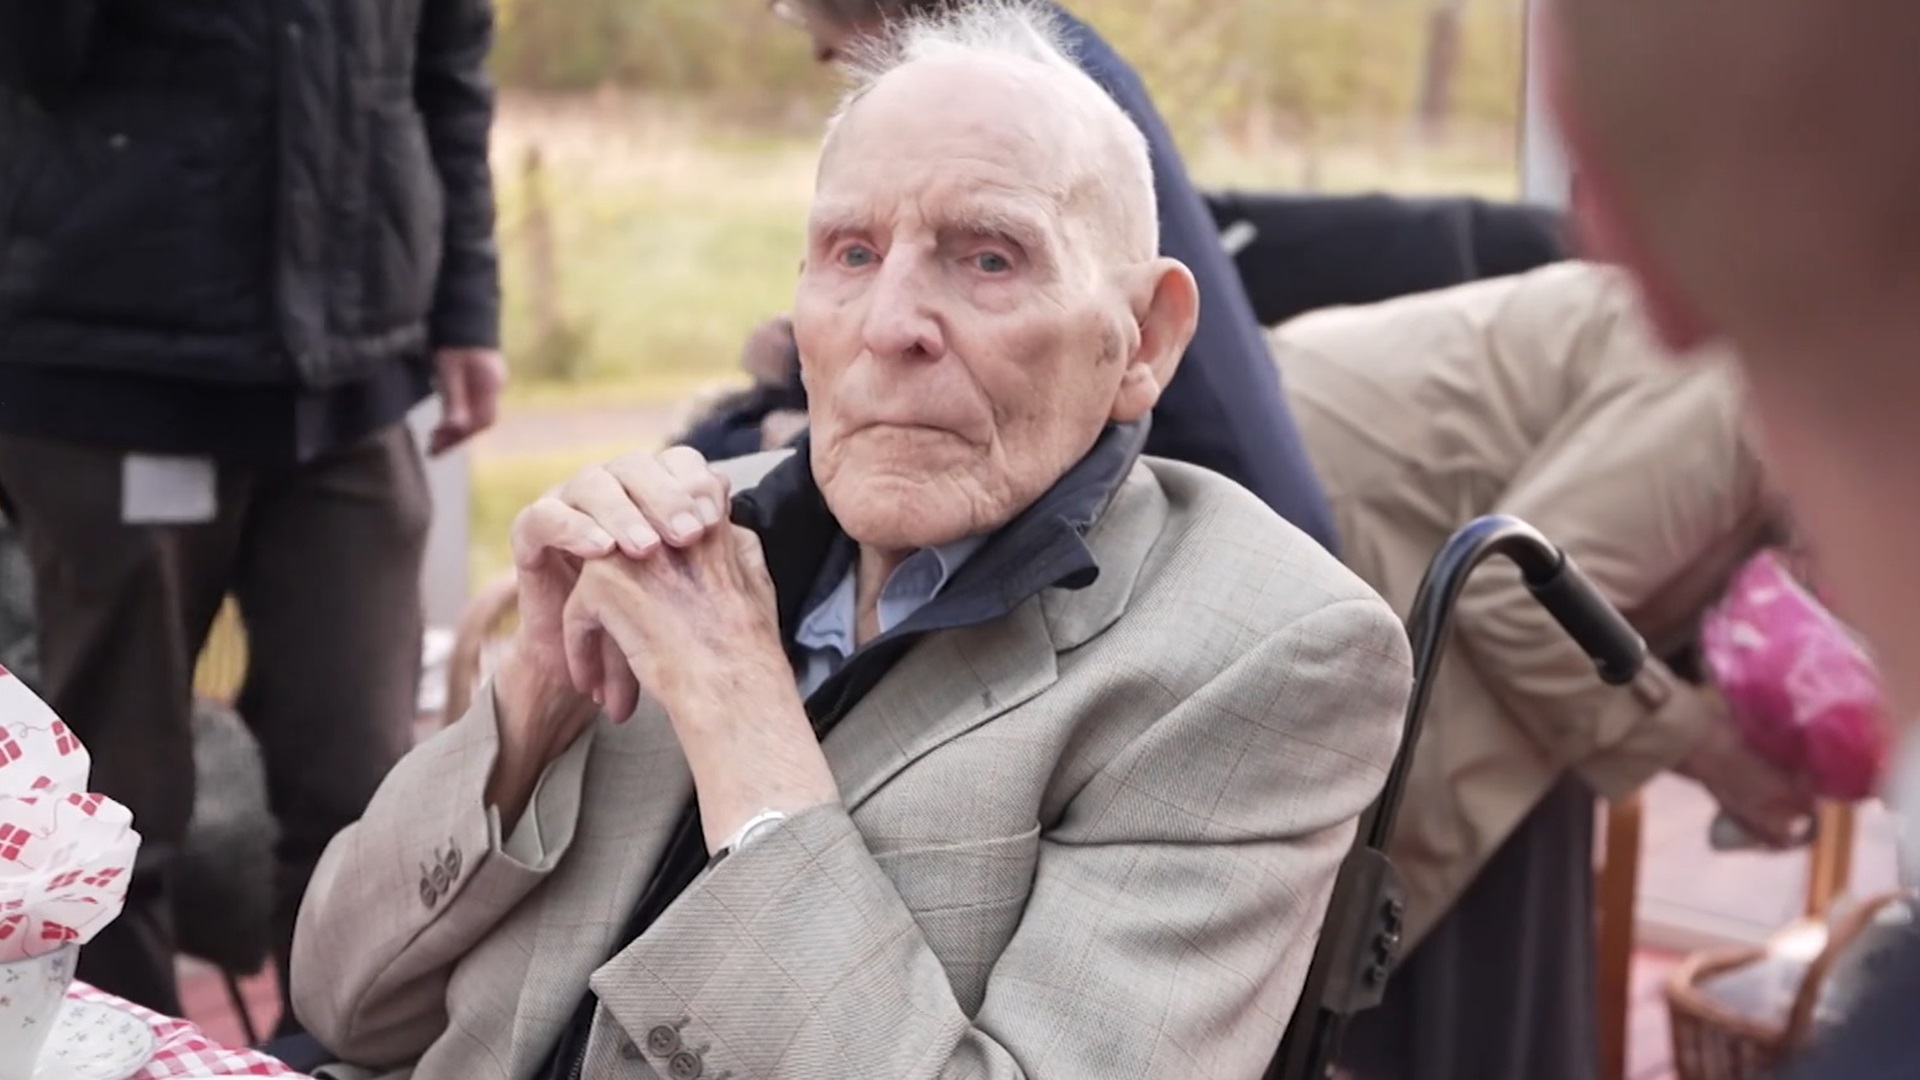 On his 110th birthday. (Screenshot, source: TV SYD)